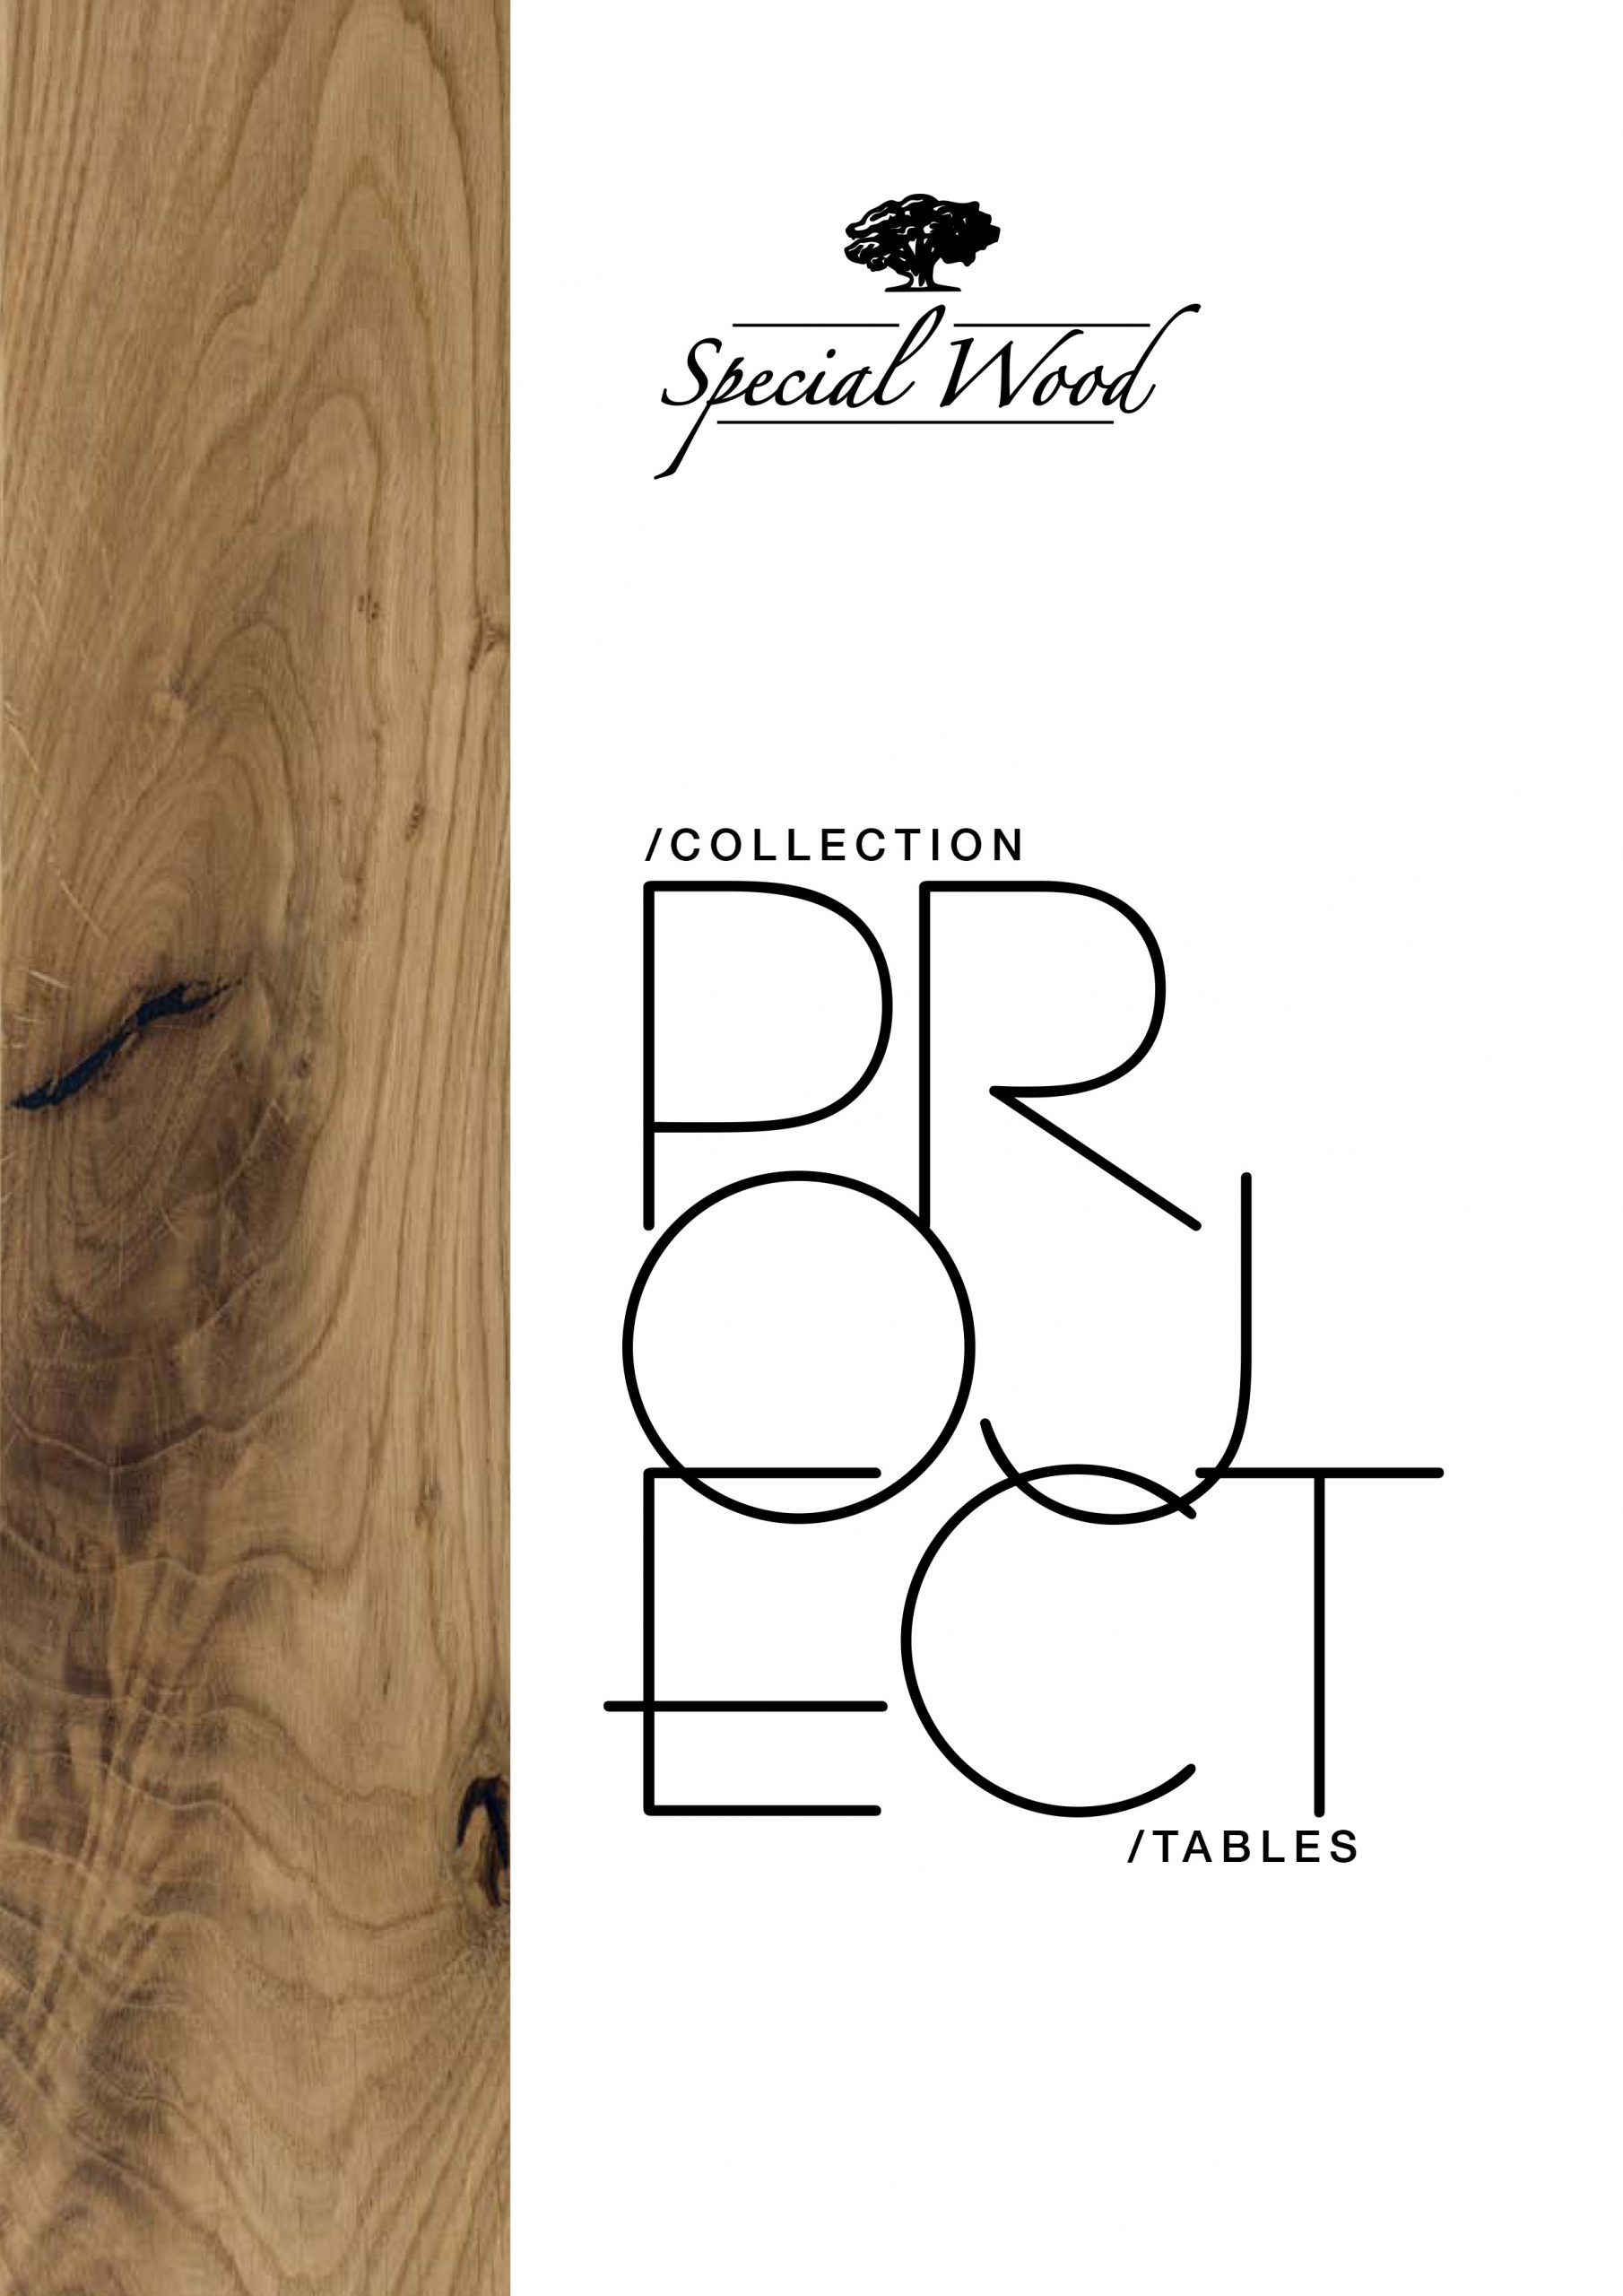 Special wood catalogo